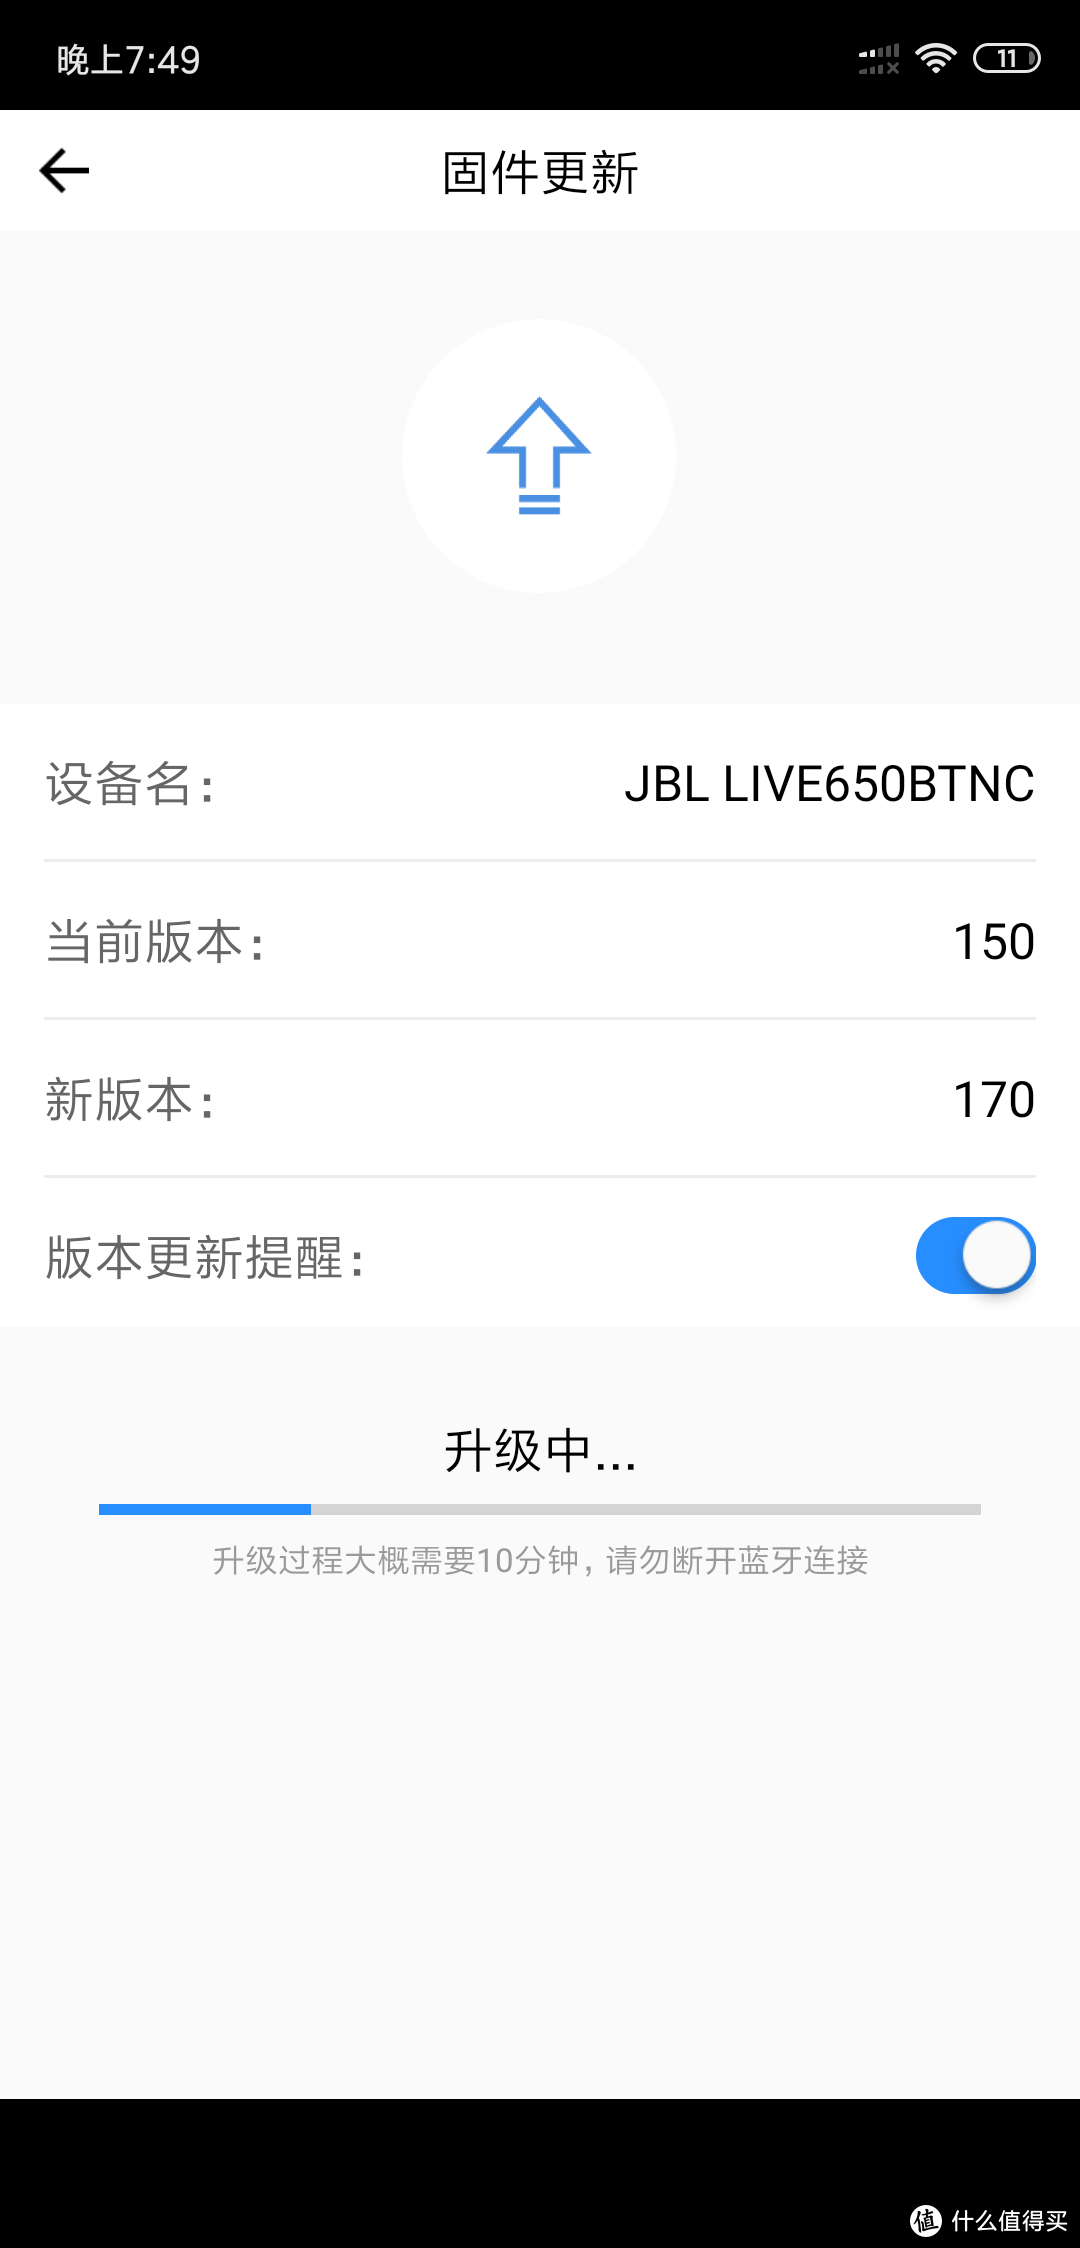 2019年的新年礼物——JBL LIVE650BTNC JBL首款AI智能耳机